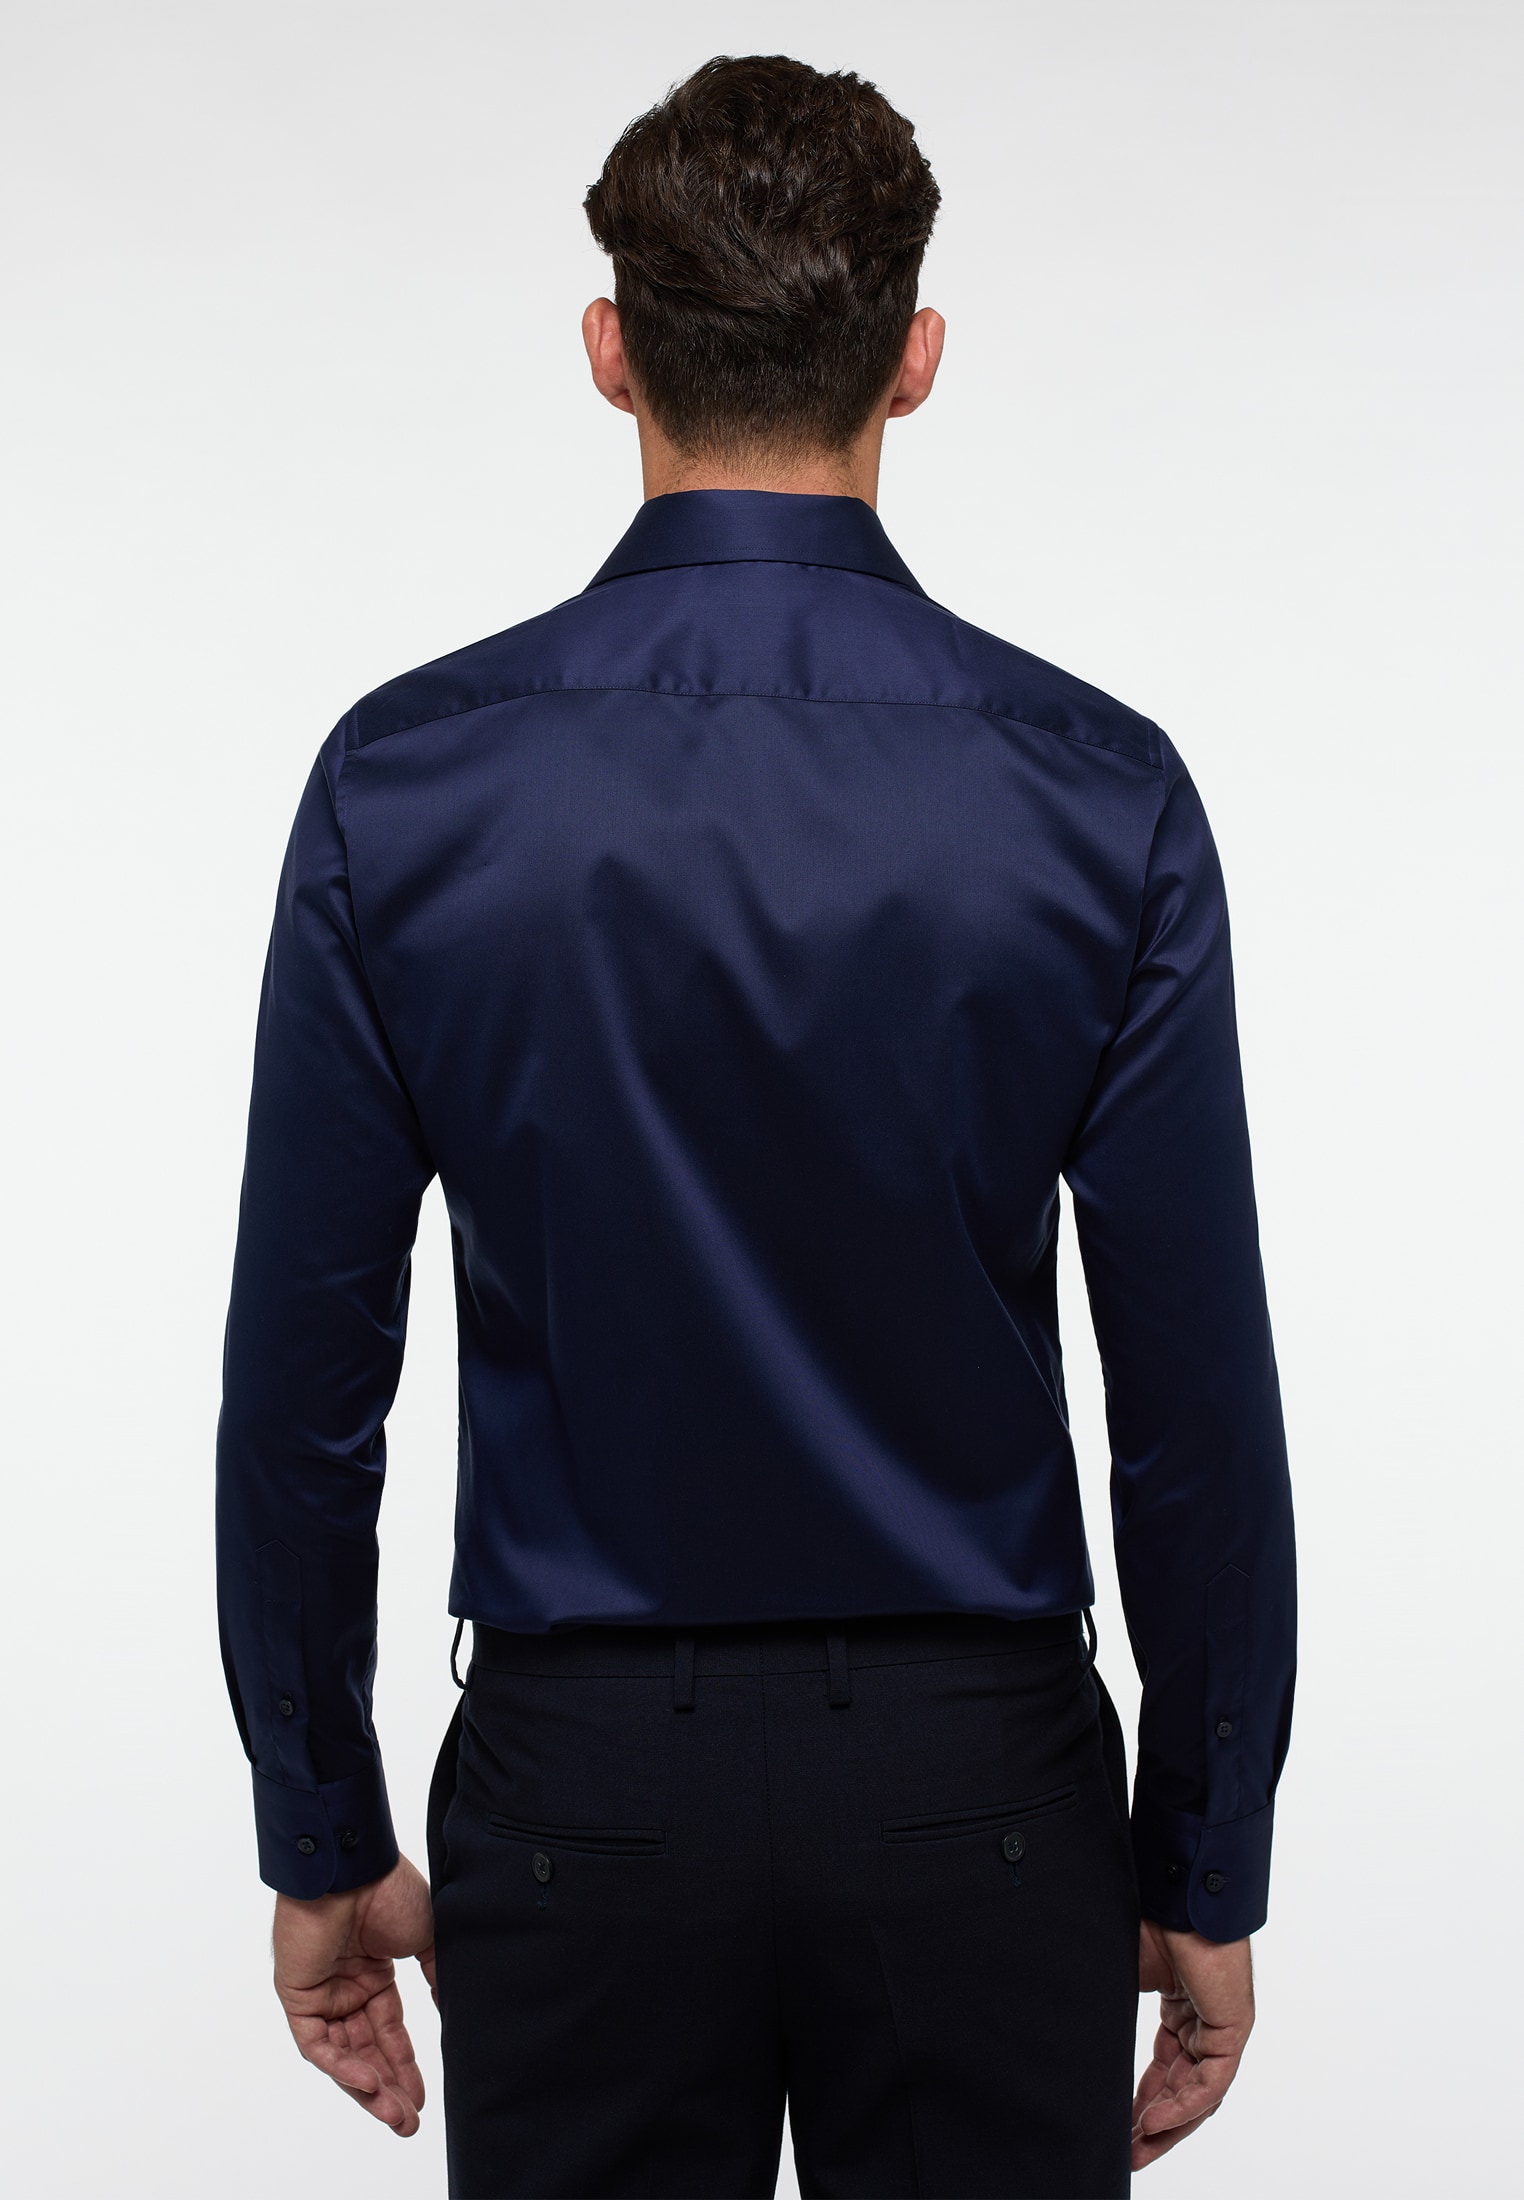 SLIM FIT Luxury Shirt in dunkelblau Langarm 44 | dunkelblau unifarben | | 1SH04299-01-81-44-1/1 